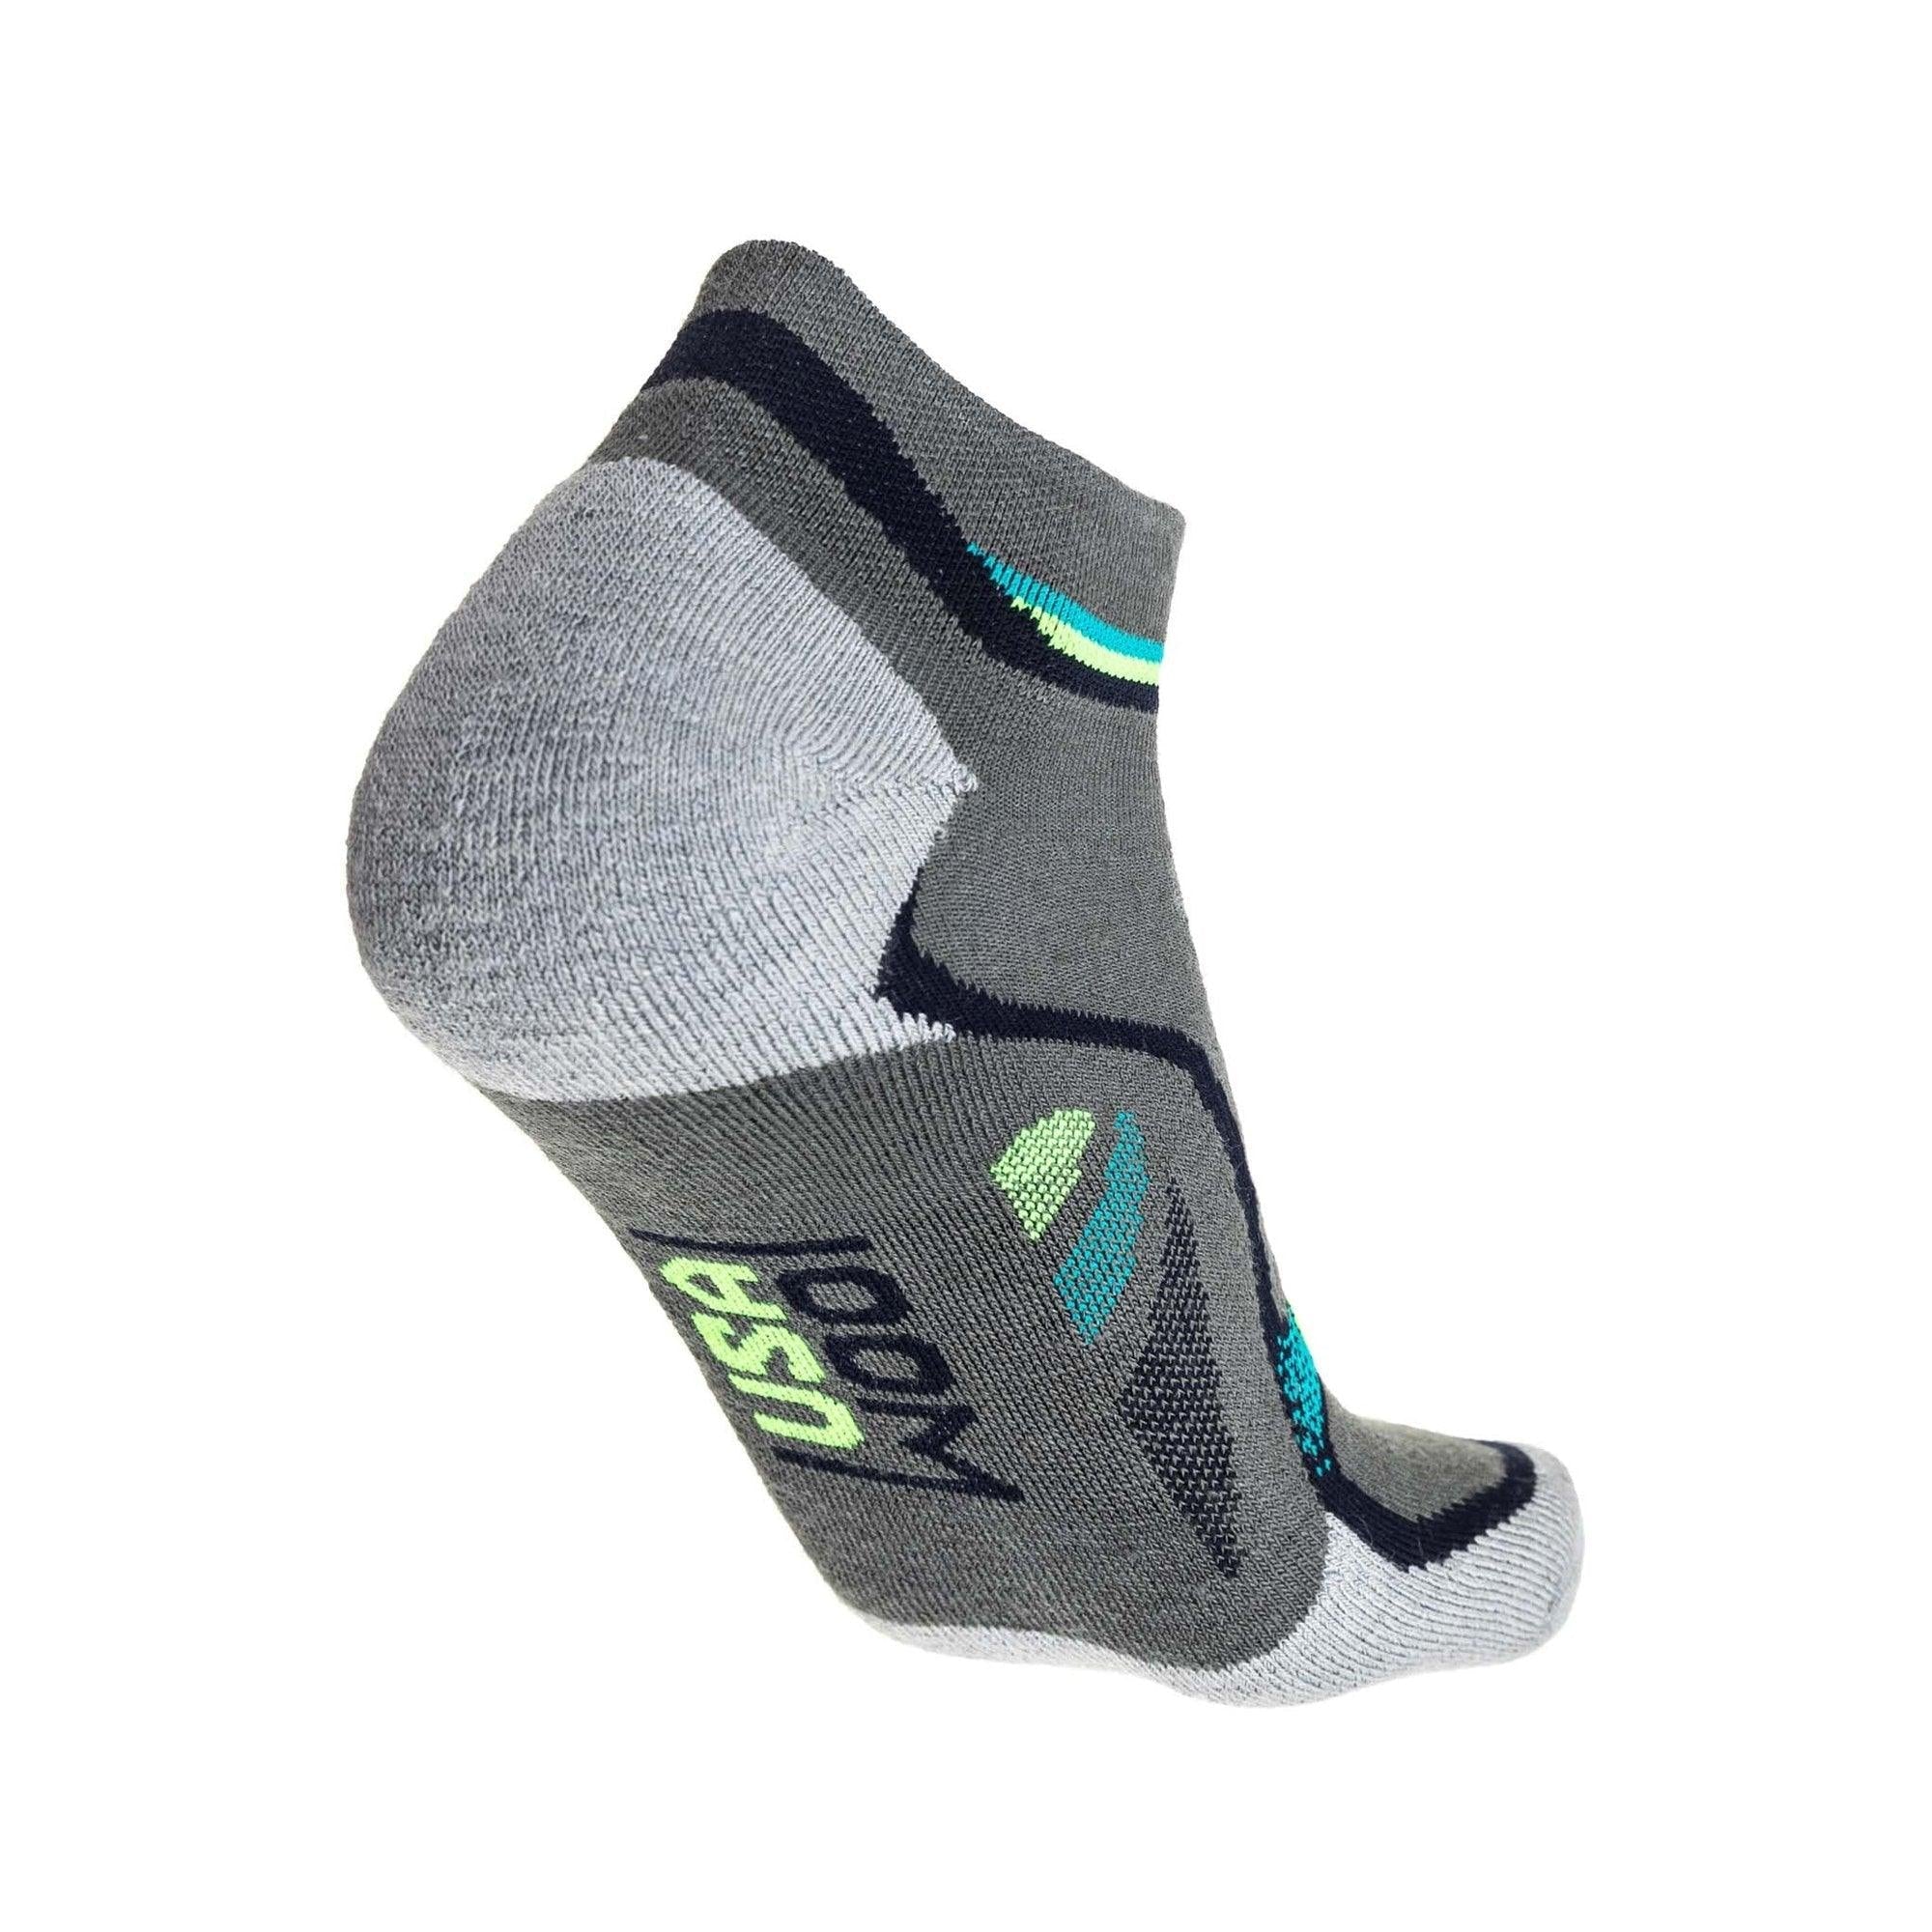 Grip6 Fastback Wool Ankle Sock - Trusted Gear Company LLC